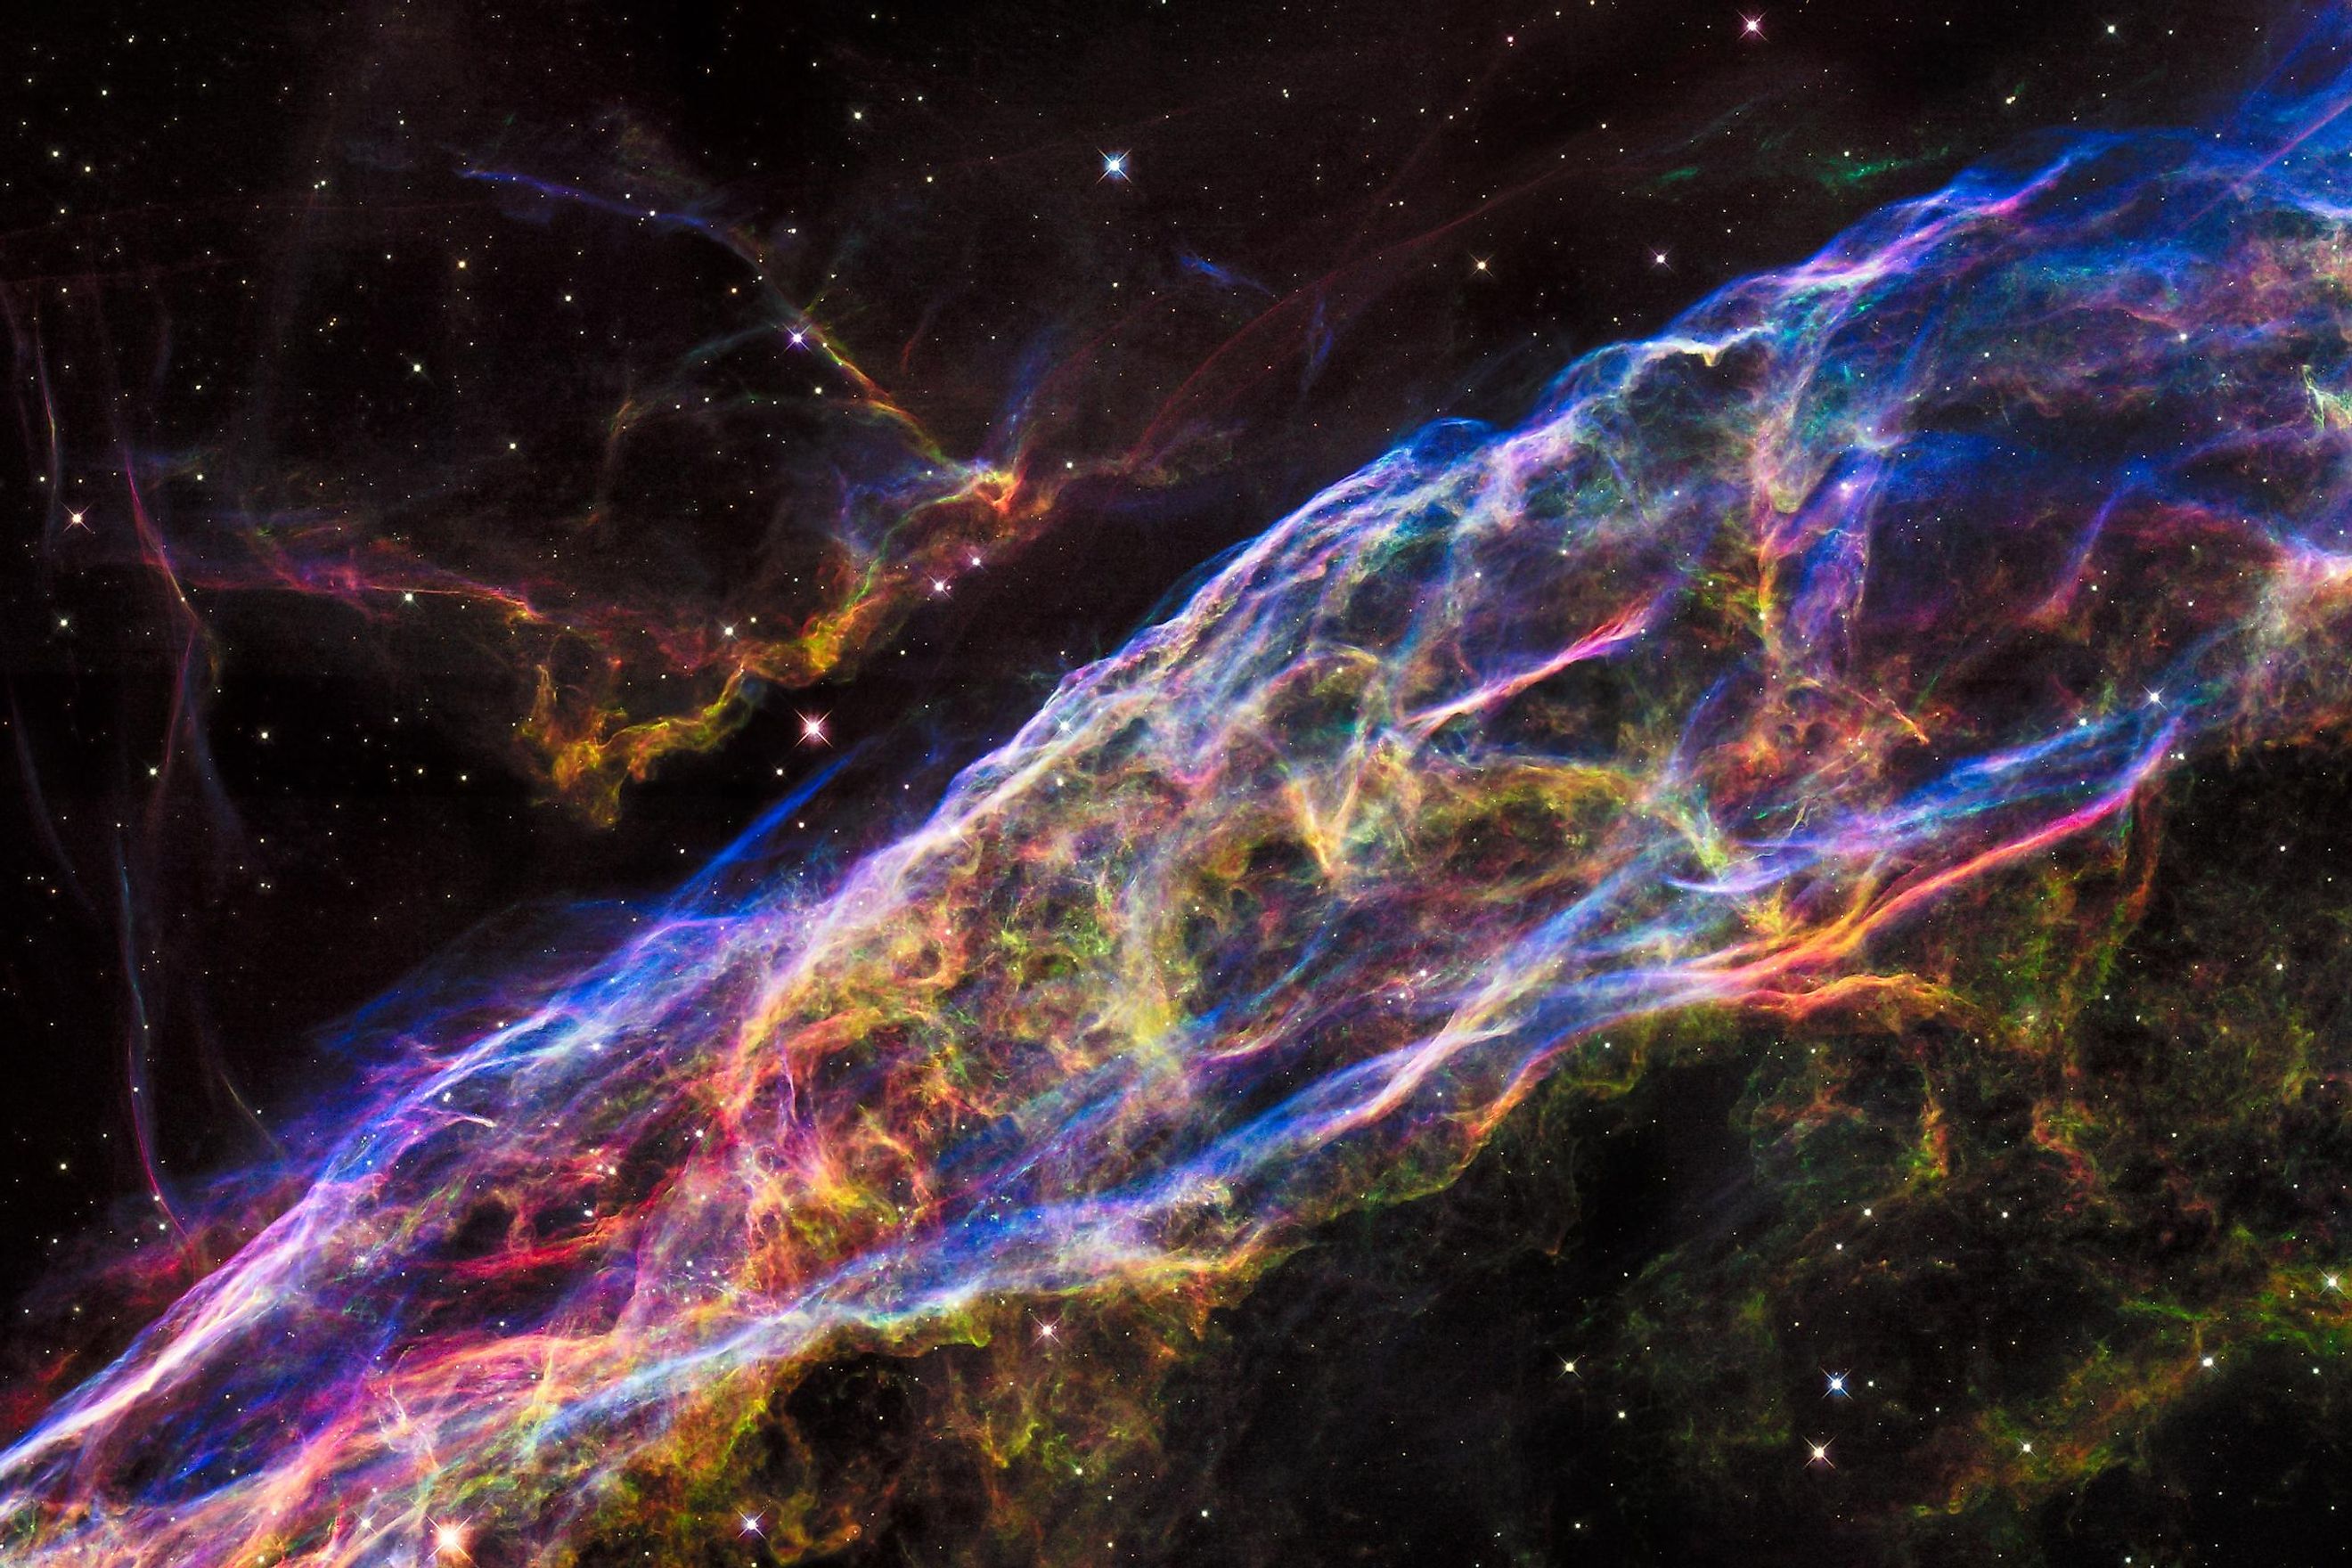 Hubble image of a supernova remnant. Image credit: NASA/ESA